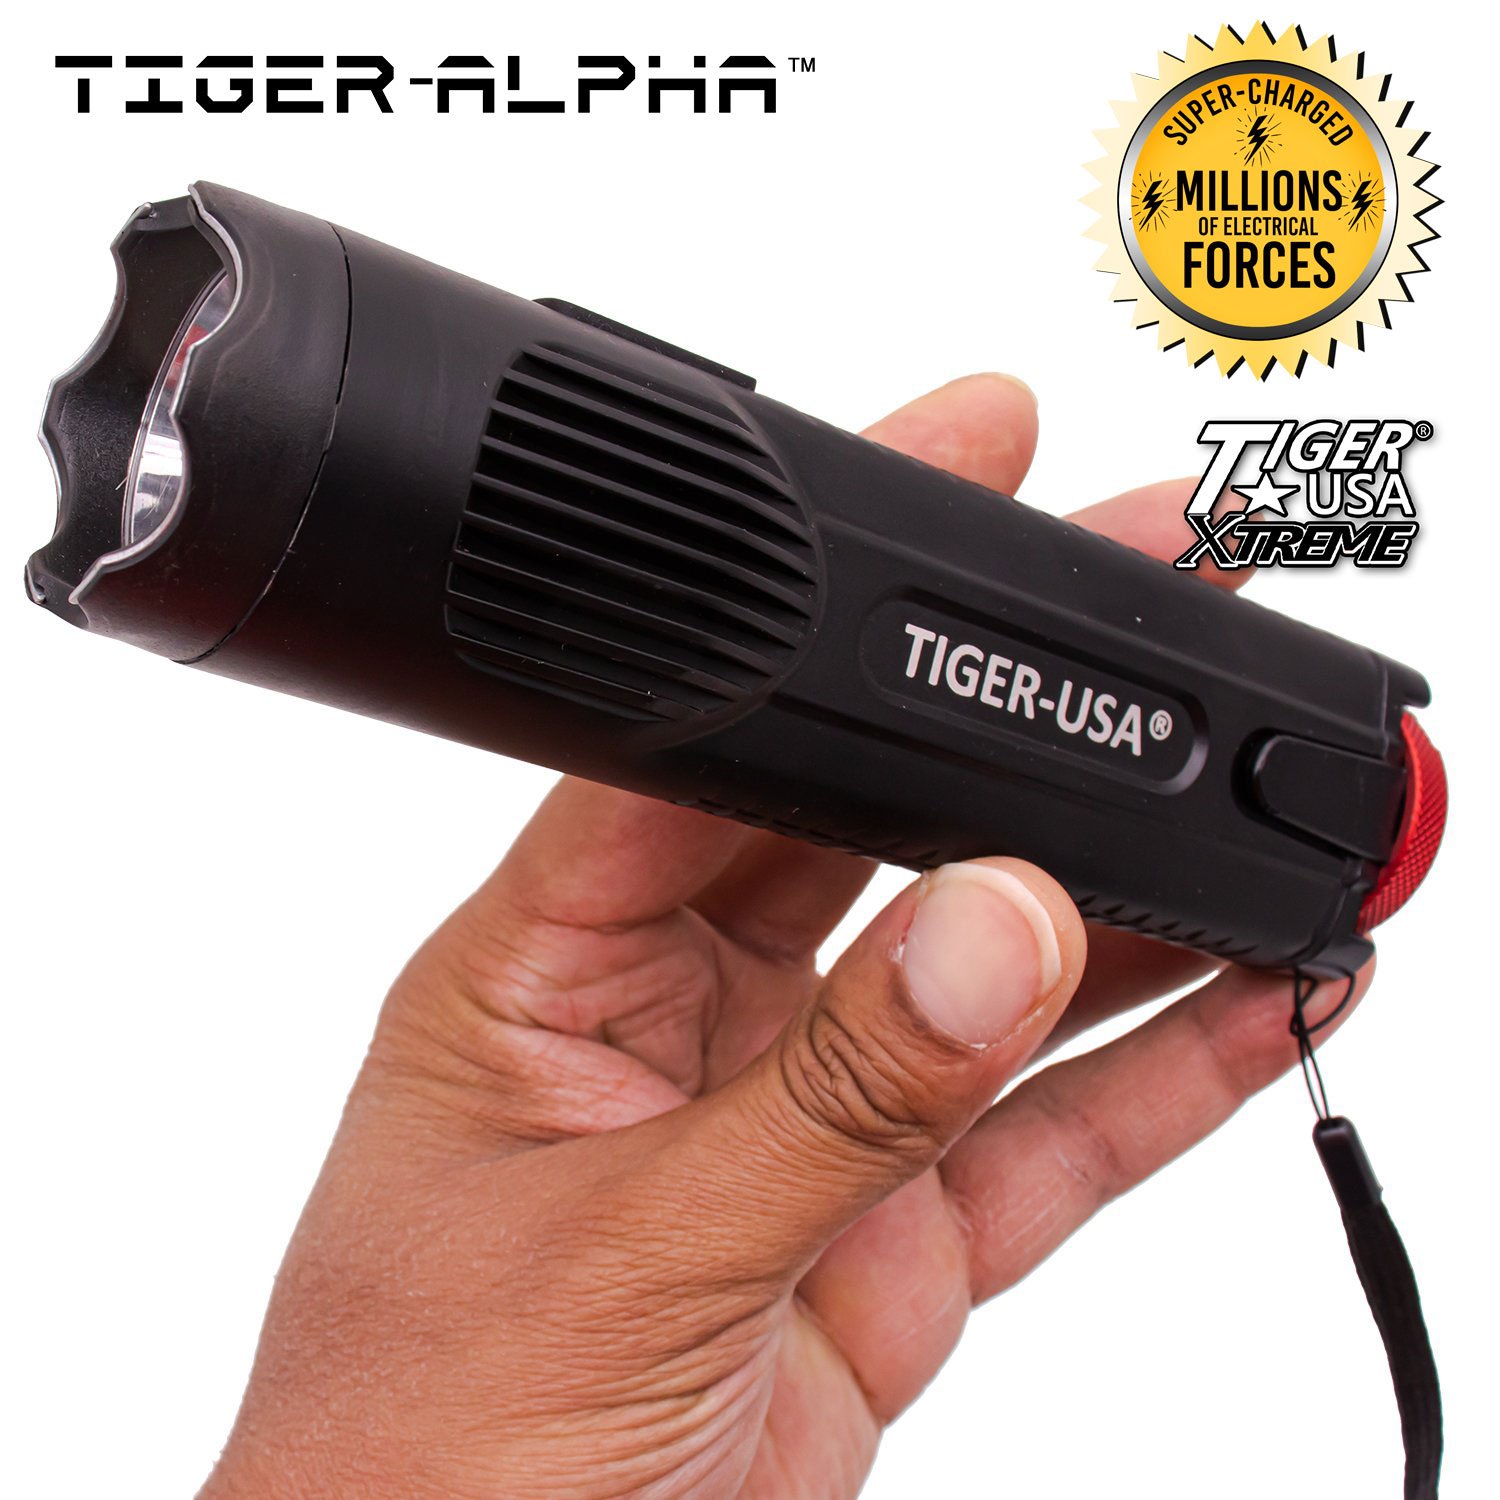 150 Mill V Tiger Alpha Tiger USA Xtreme Stun Gun Flashlight